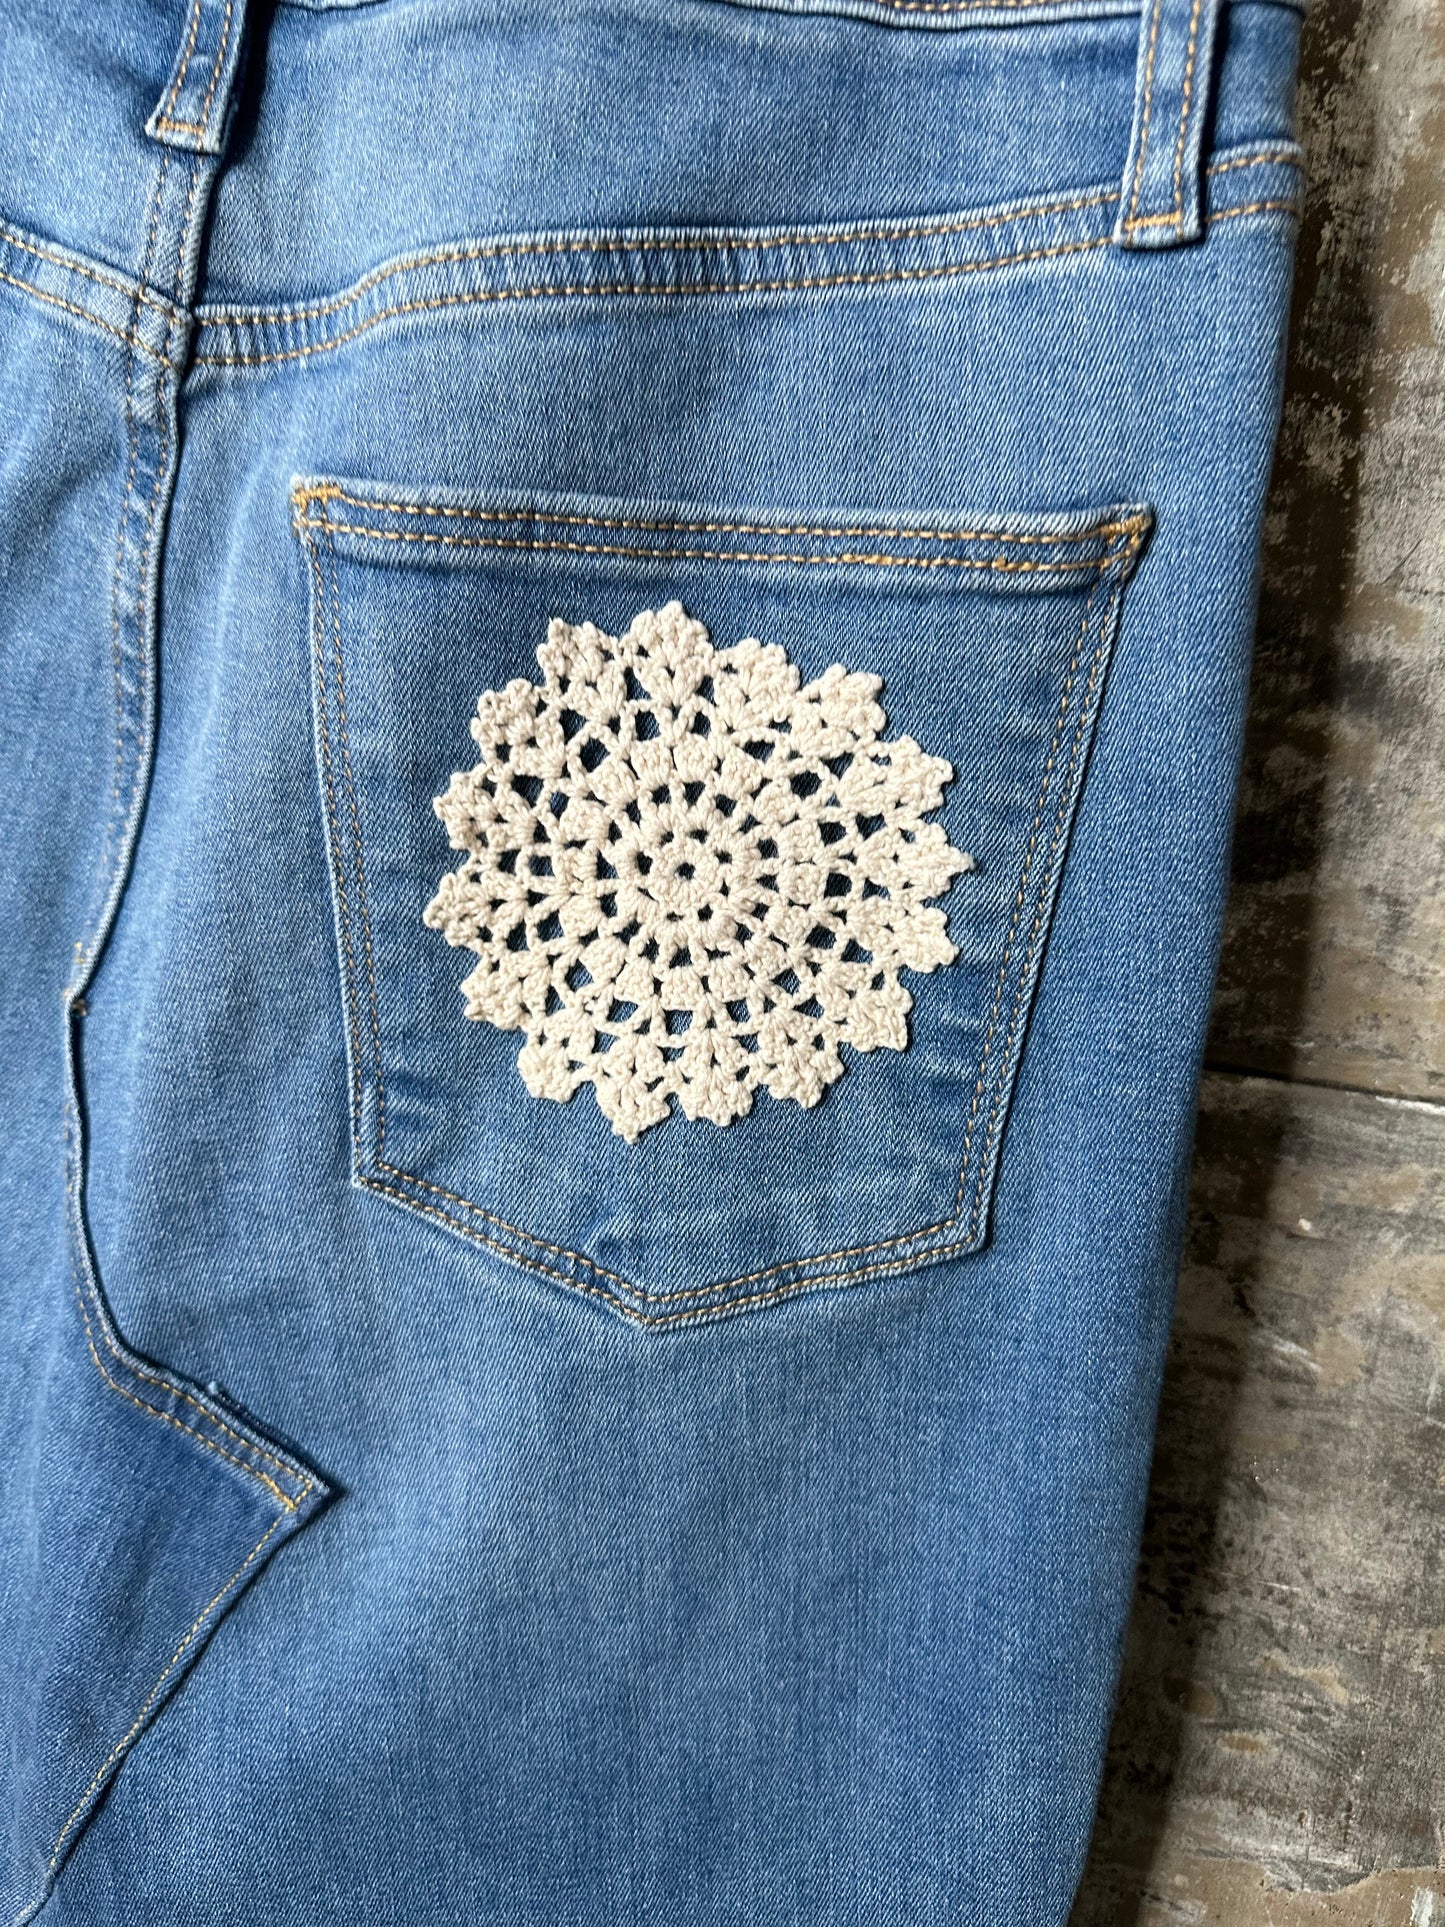 patched blue denim + lace maxi skirt, (size 29)